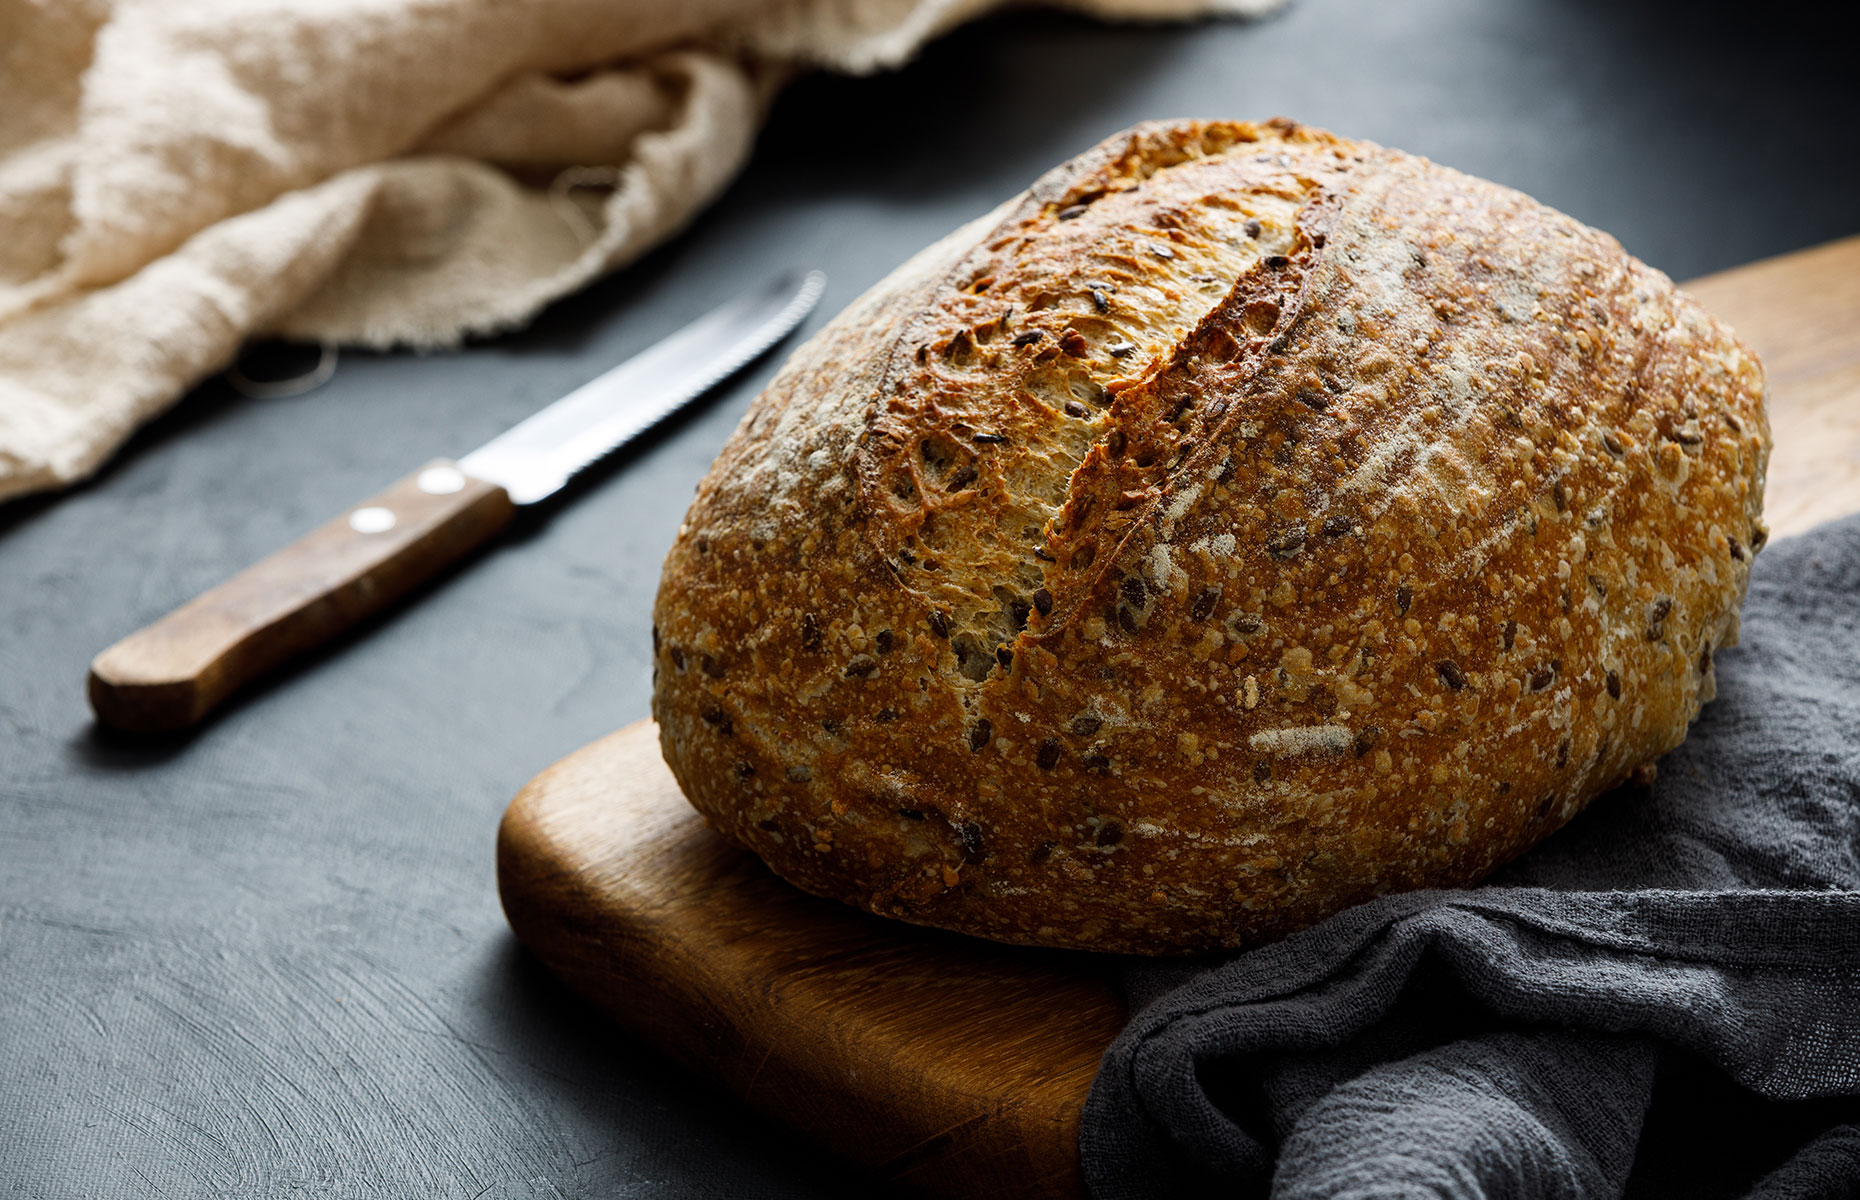 Sourdough loaf (Image: 77Studio/Shutterstock)